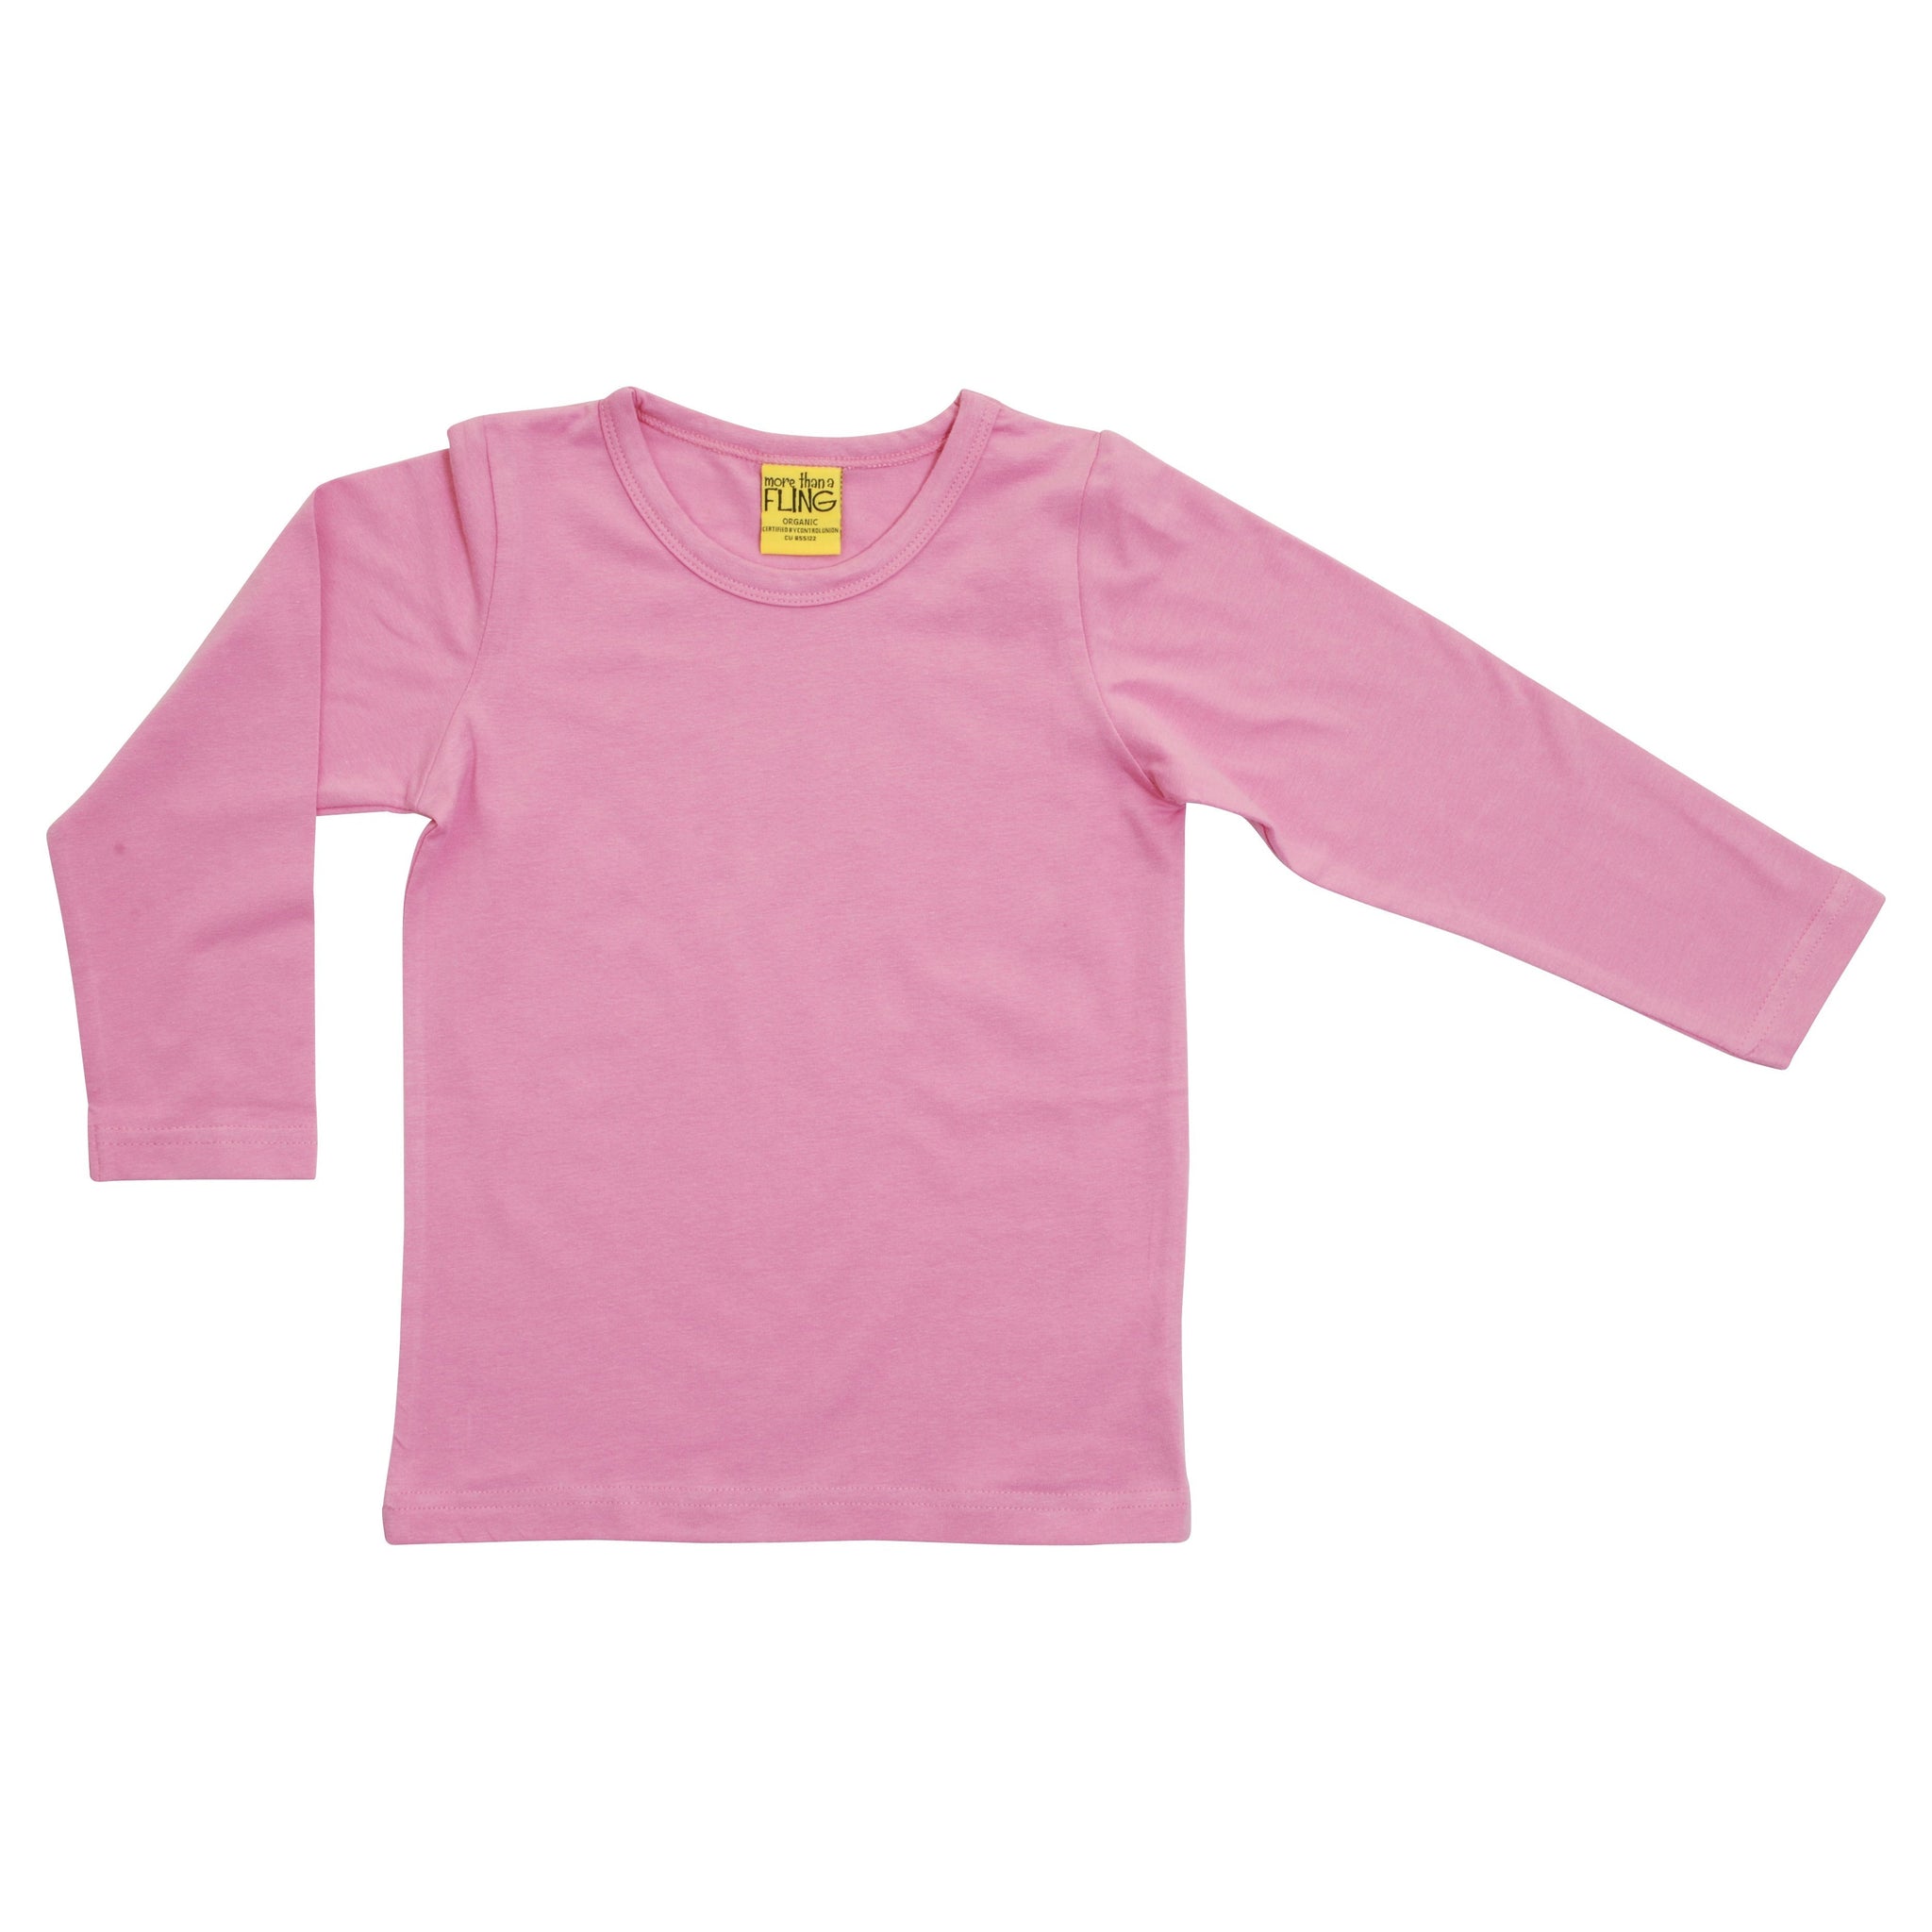 More Than A FLING - Fuschia Pink Long Sleeved Top